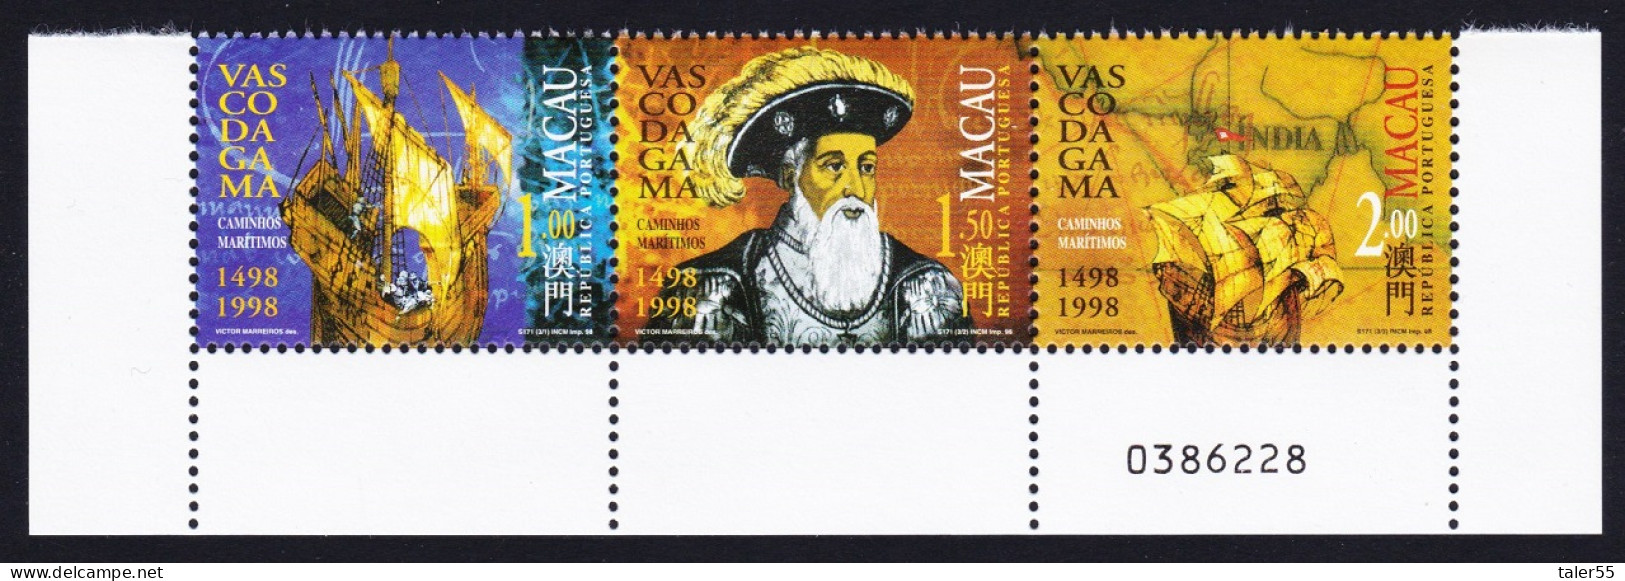 Macao Macau Vasco Da Gama 1498 Strip Of 3v Control Number 1998 MNH SG#1044-1046 Sc#943-946 - Unused Stamps